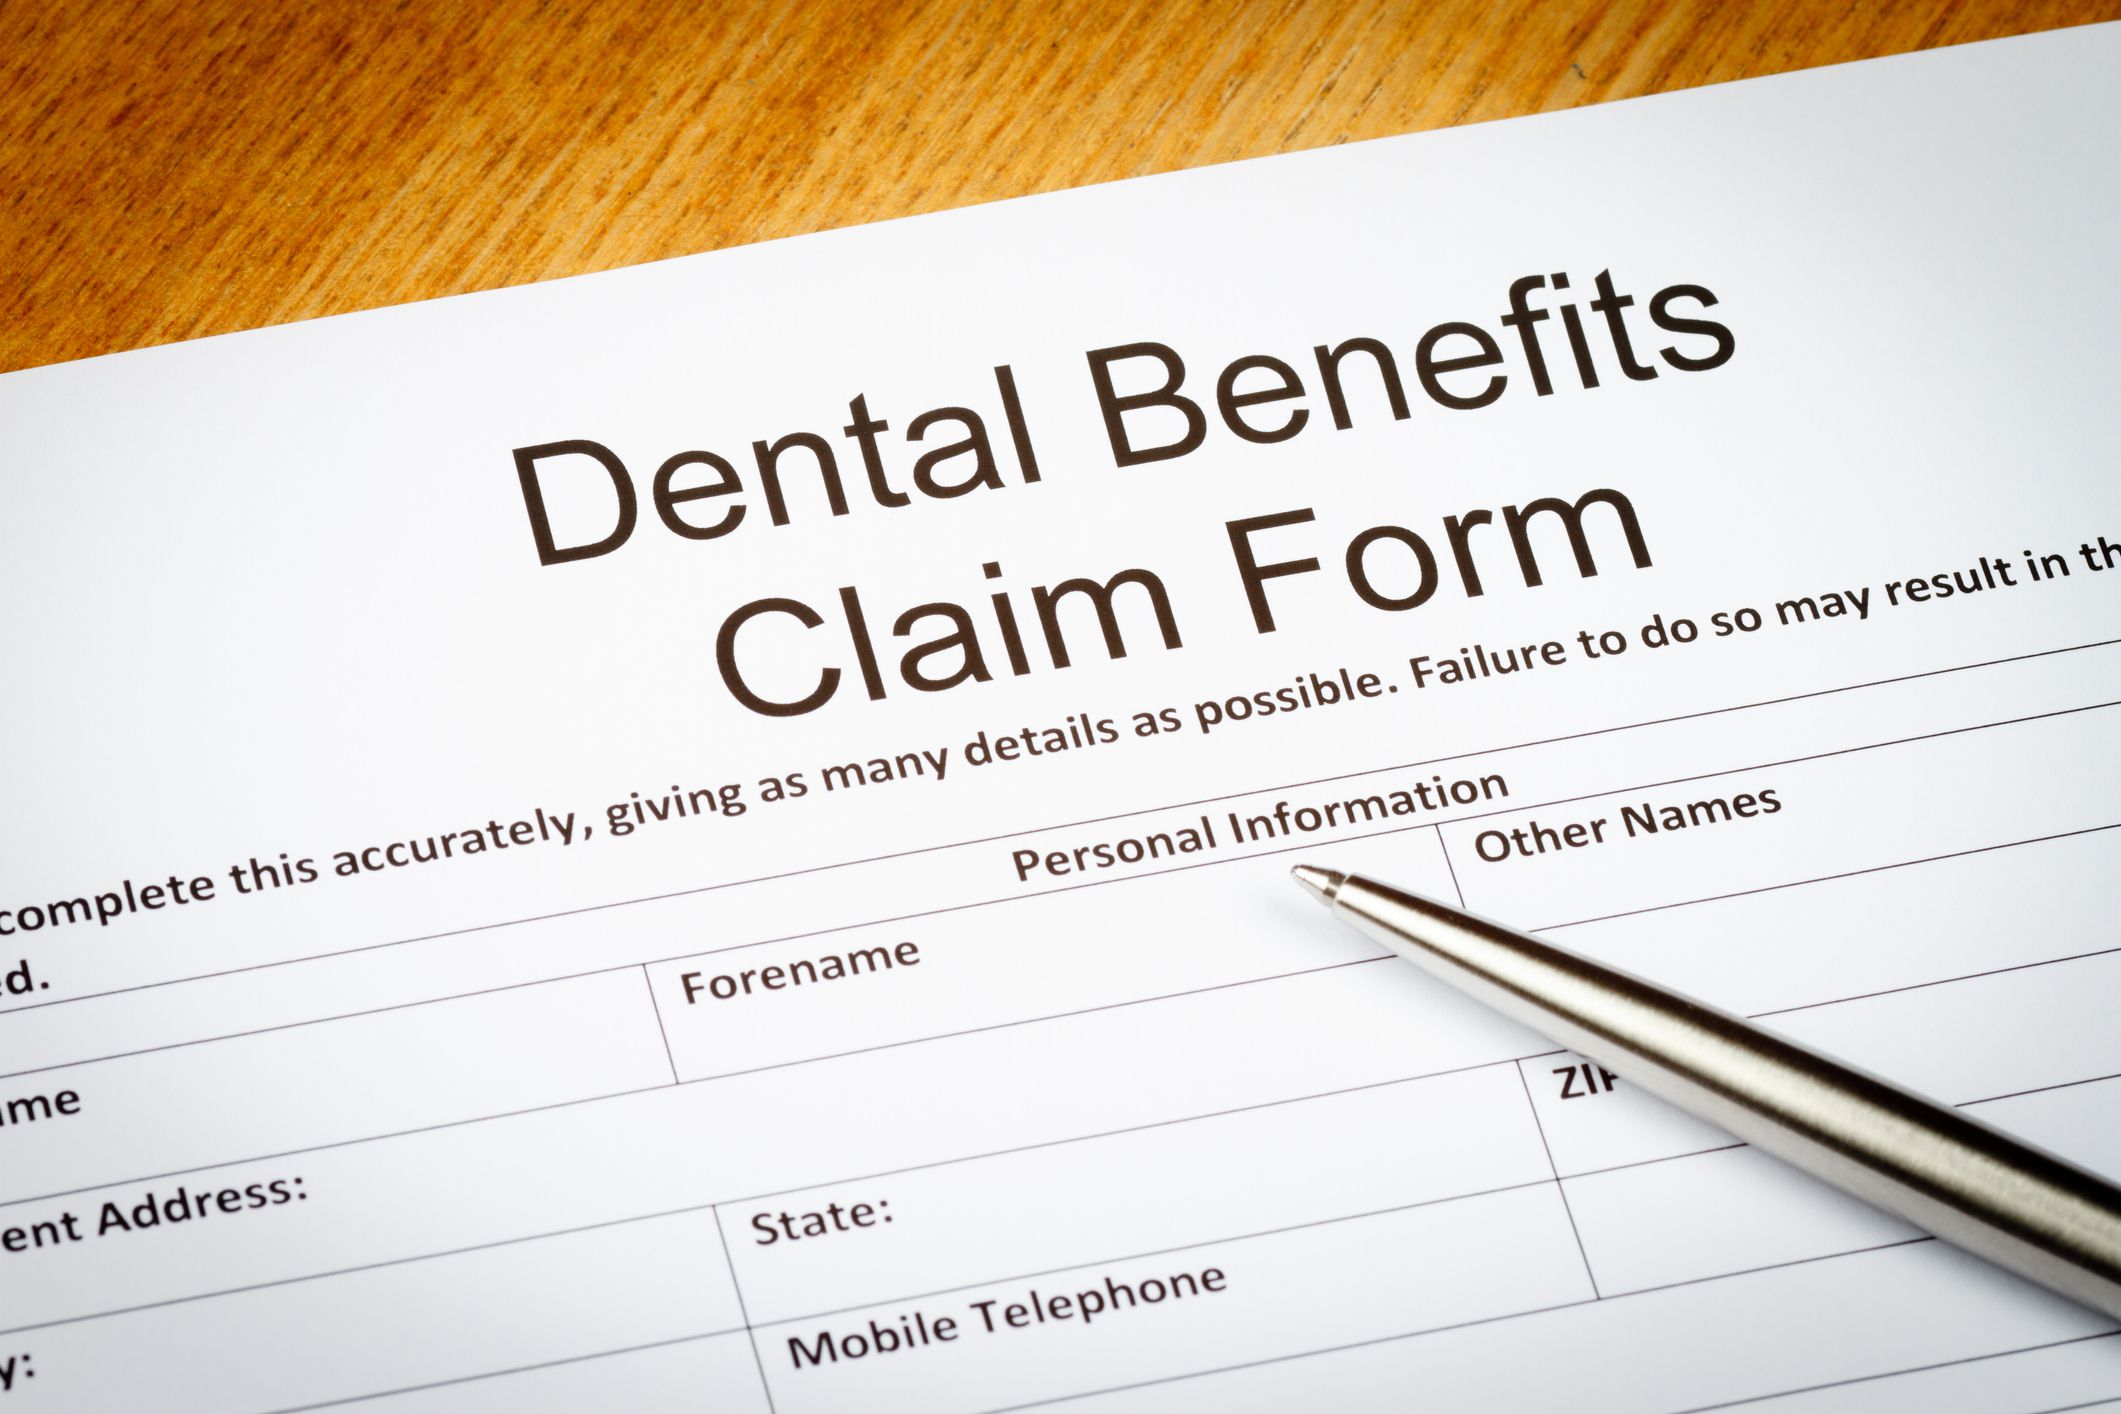 Is Dental Insurance Tax Deductible?